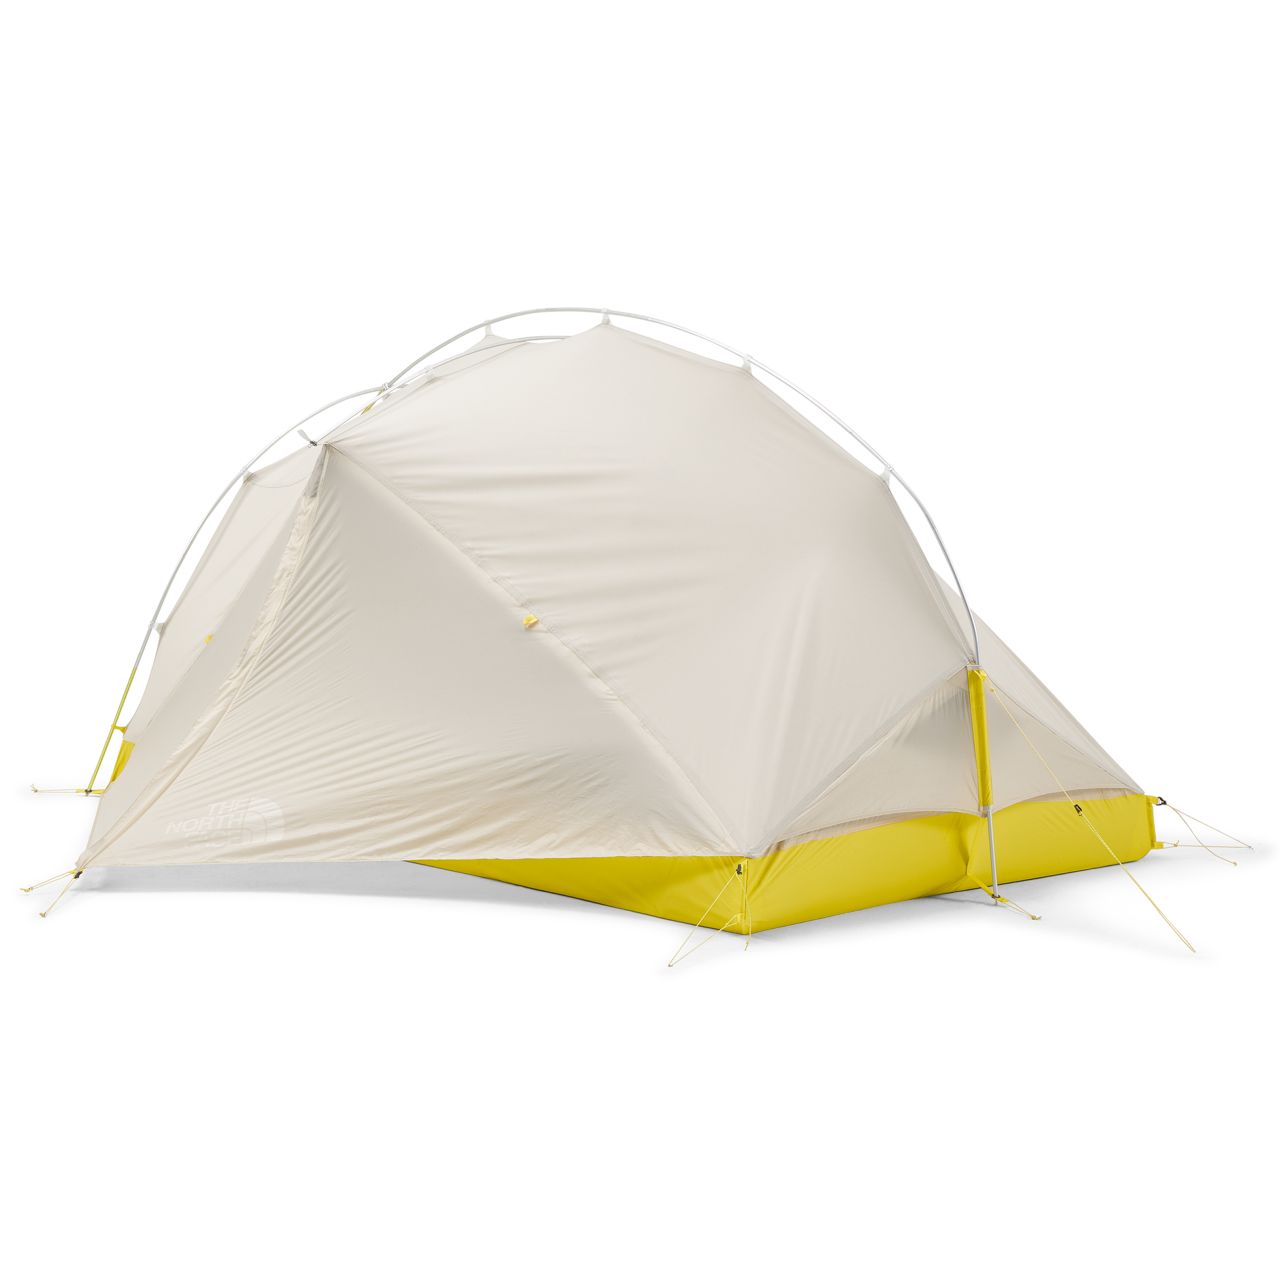 The Triarch 2.0 | Ultralight Tents 3-Season Tents